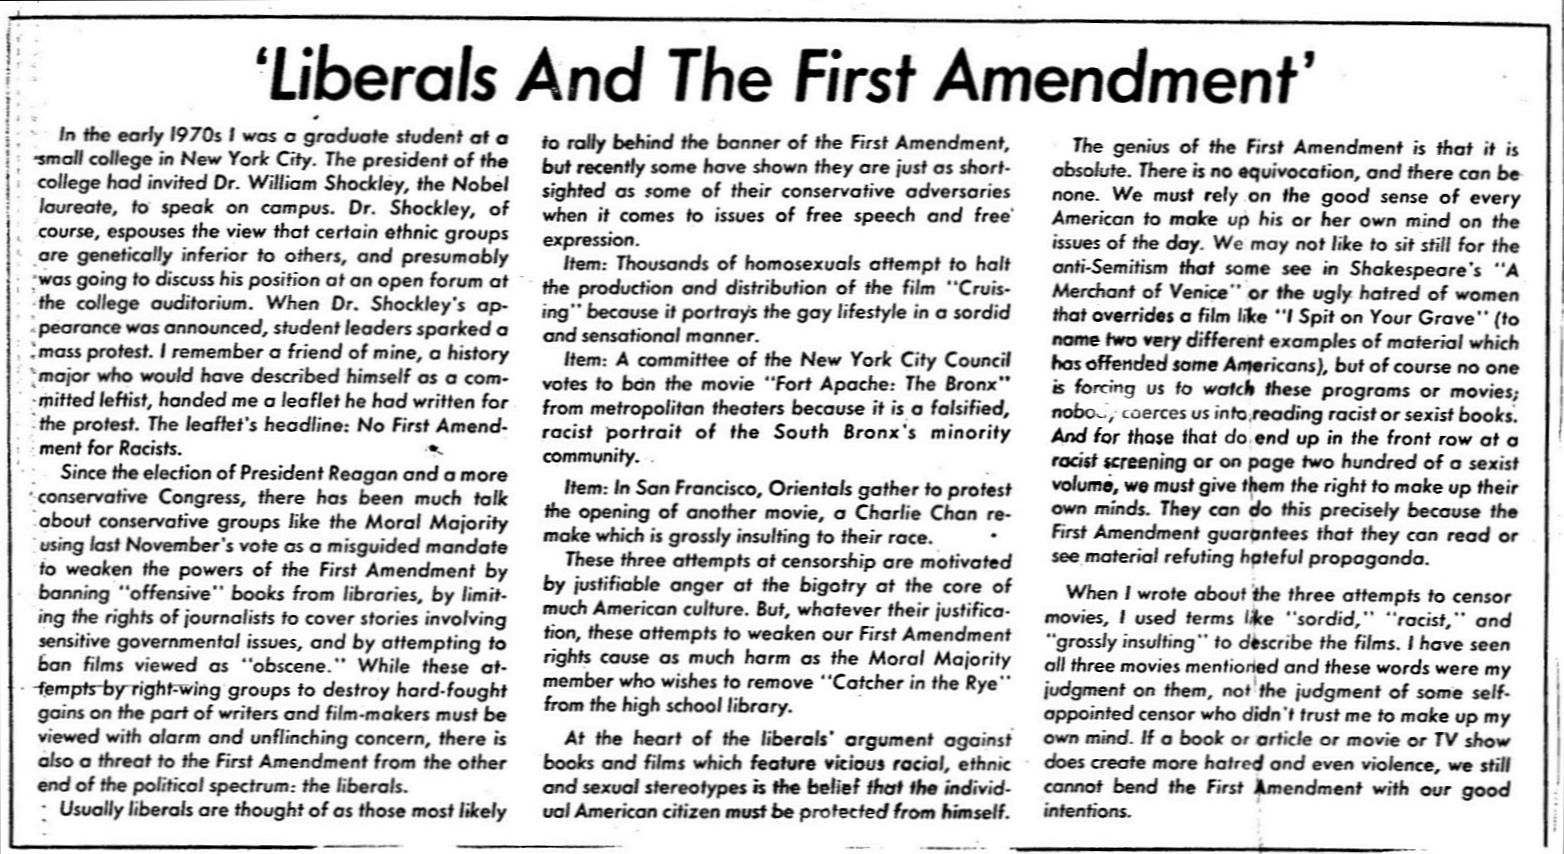 liberals-and-the-first-amendment